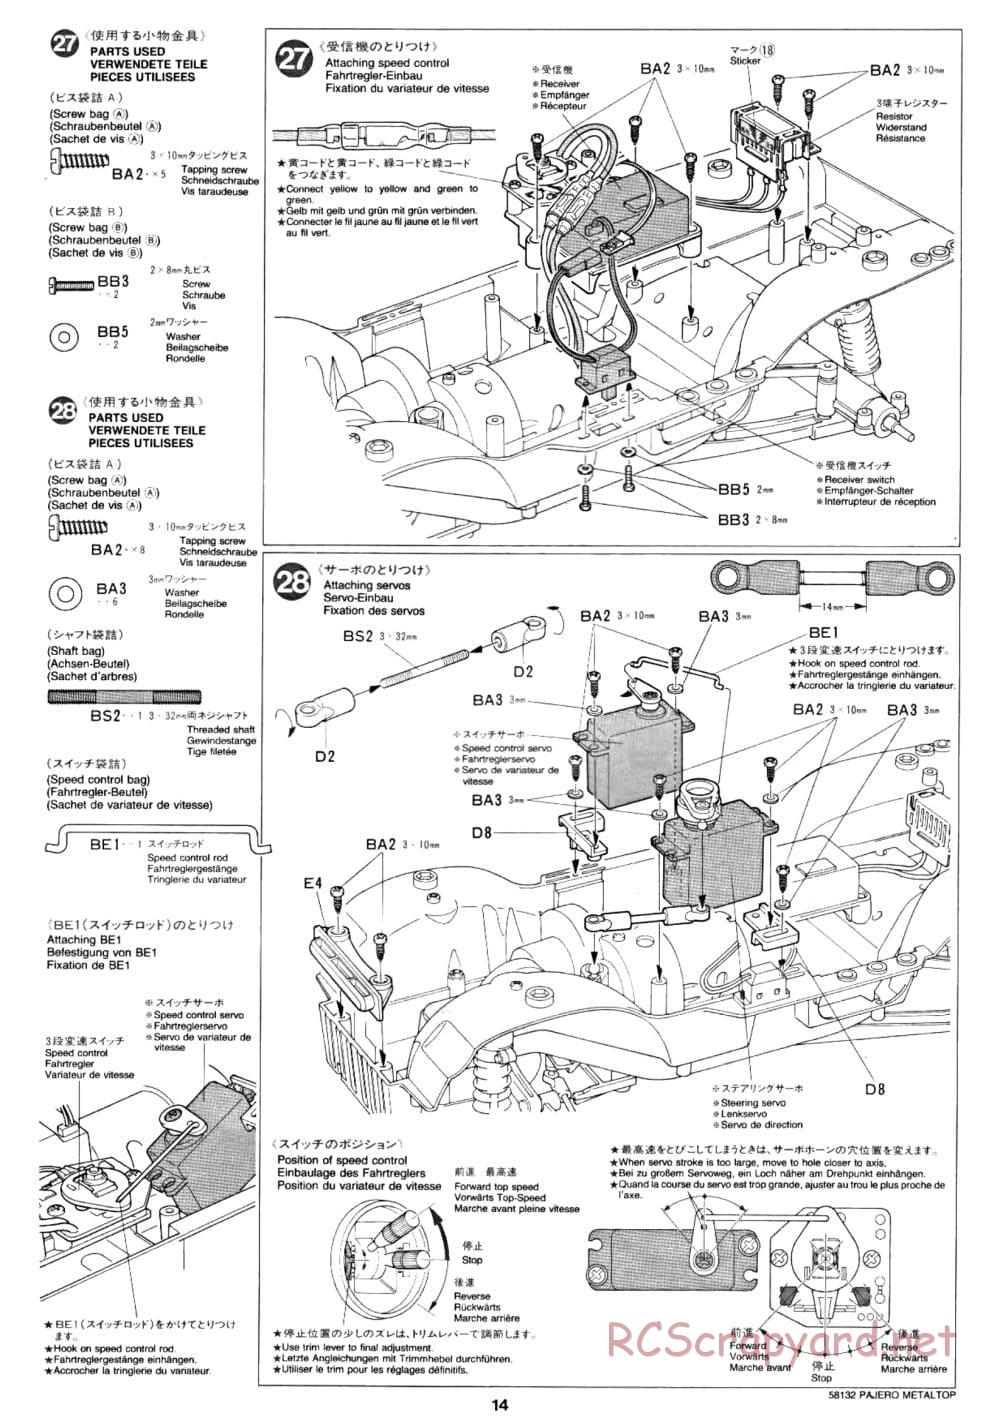 Tamiya - Mitsubishi Pajero Metaltop Wide - CC-01 Chassis - Manual - Page 14